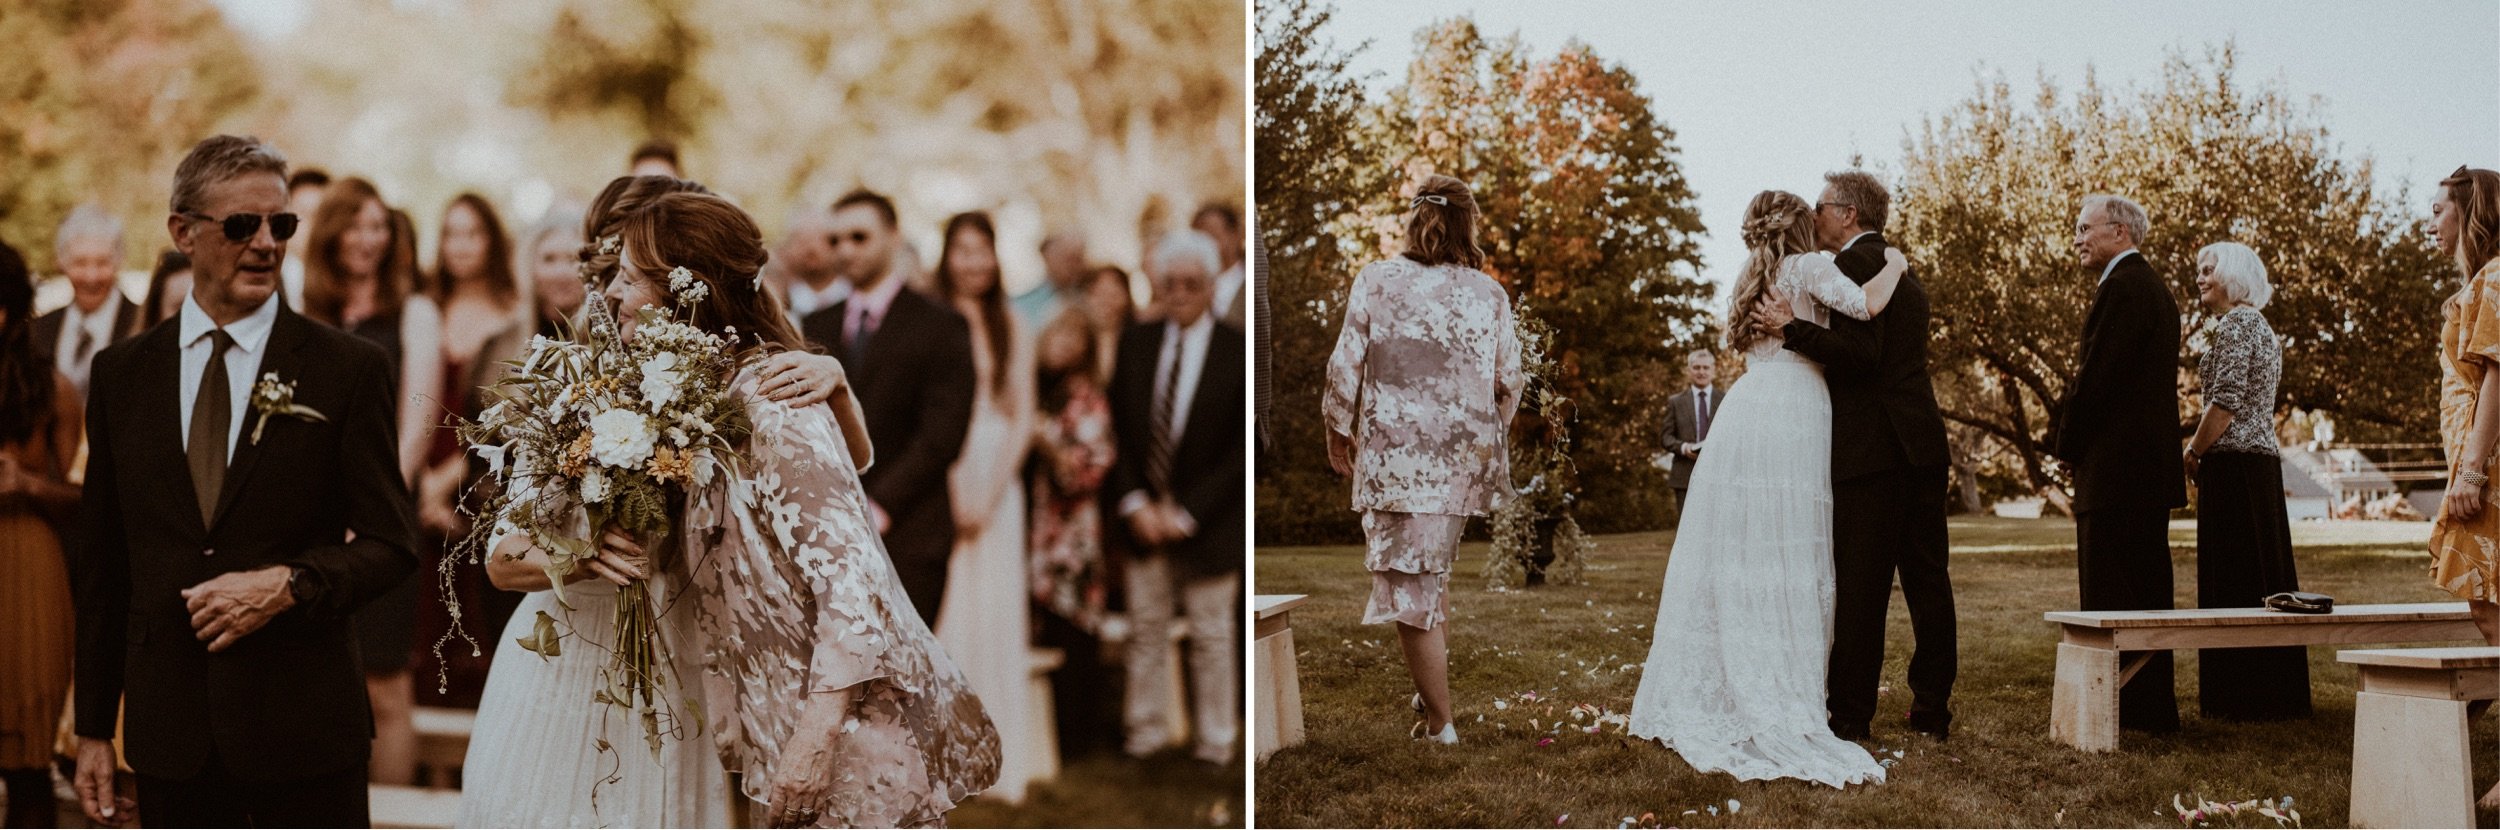 072_Gloriosa & Co Fall Wedding at The Curtis House Ashfield MA - Vanessa Alves Photography.jpg